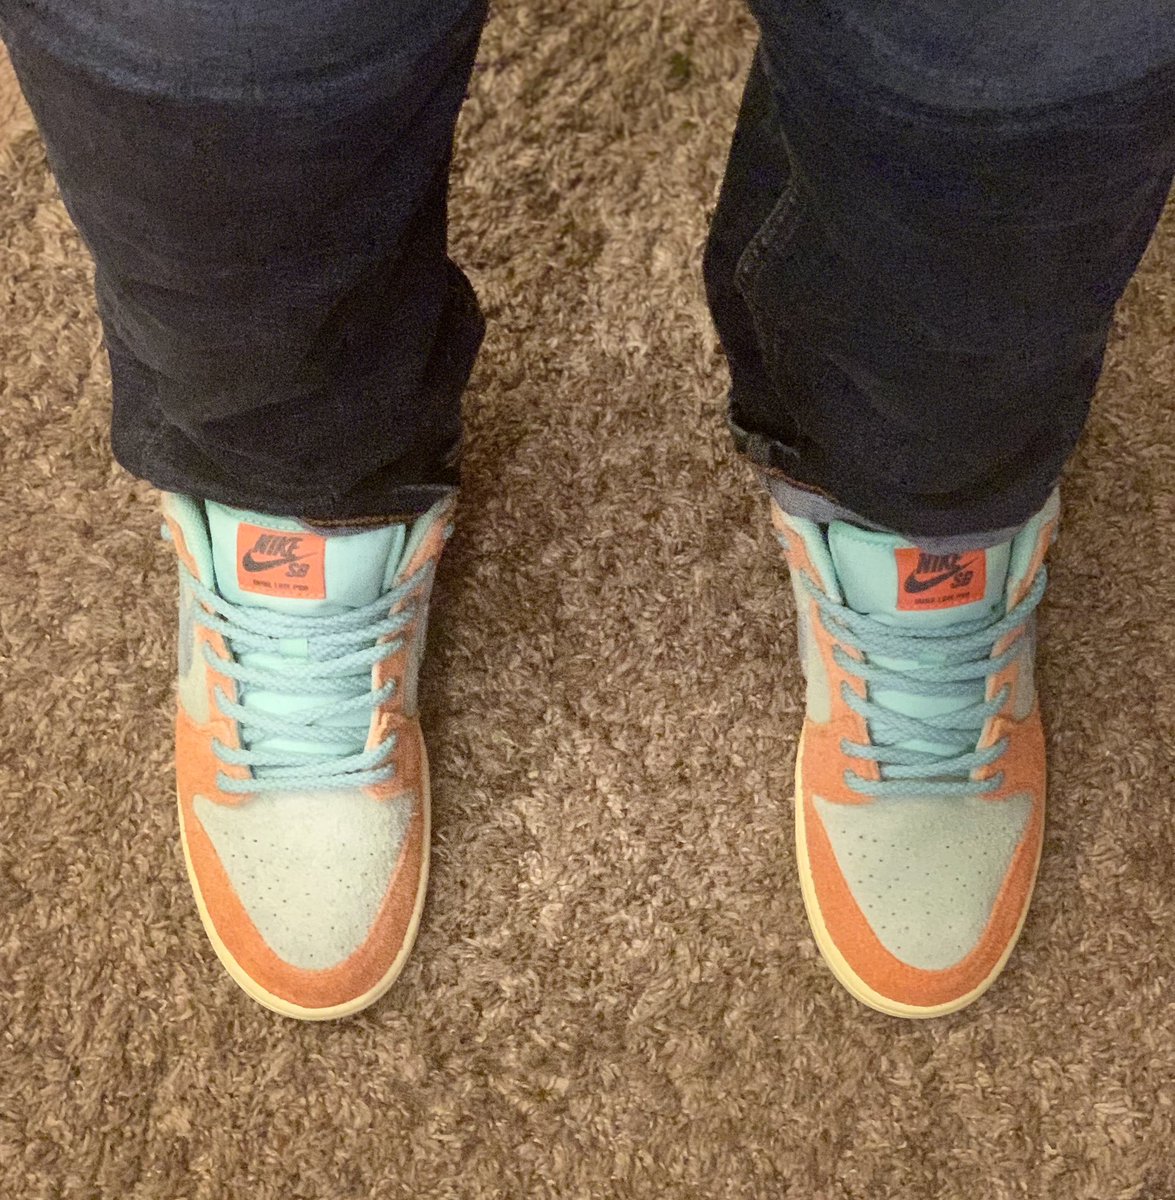 #kotd Orange Emrald SBs with the laces from Big Money SBs. #laceswap #sneakerhead #SBJunkie